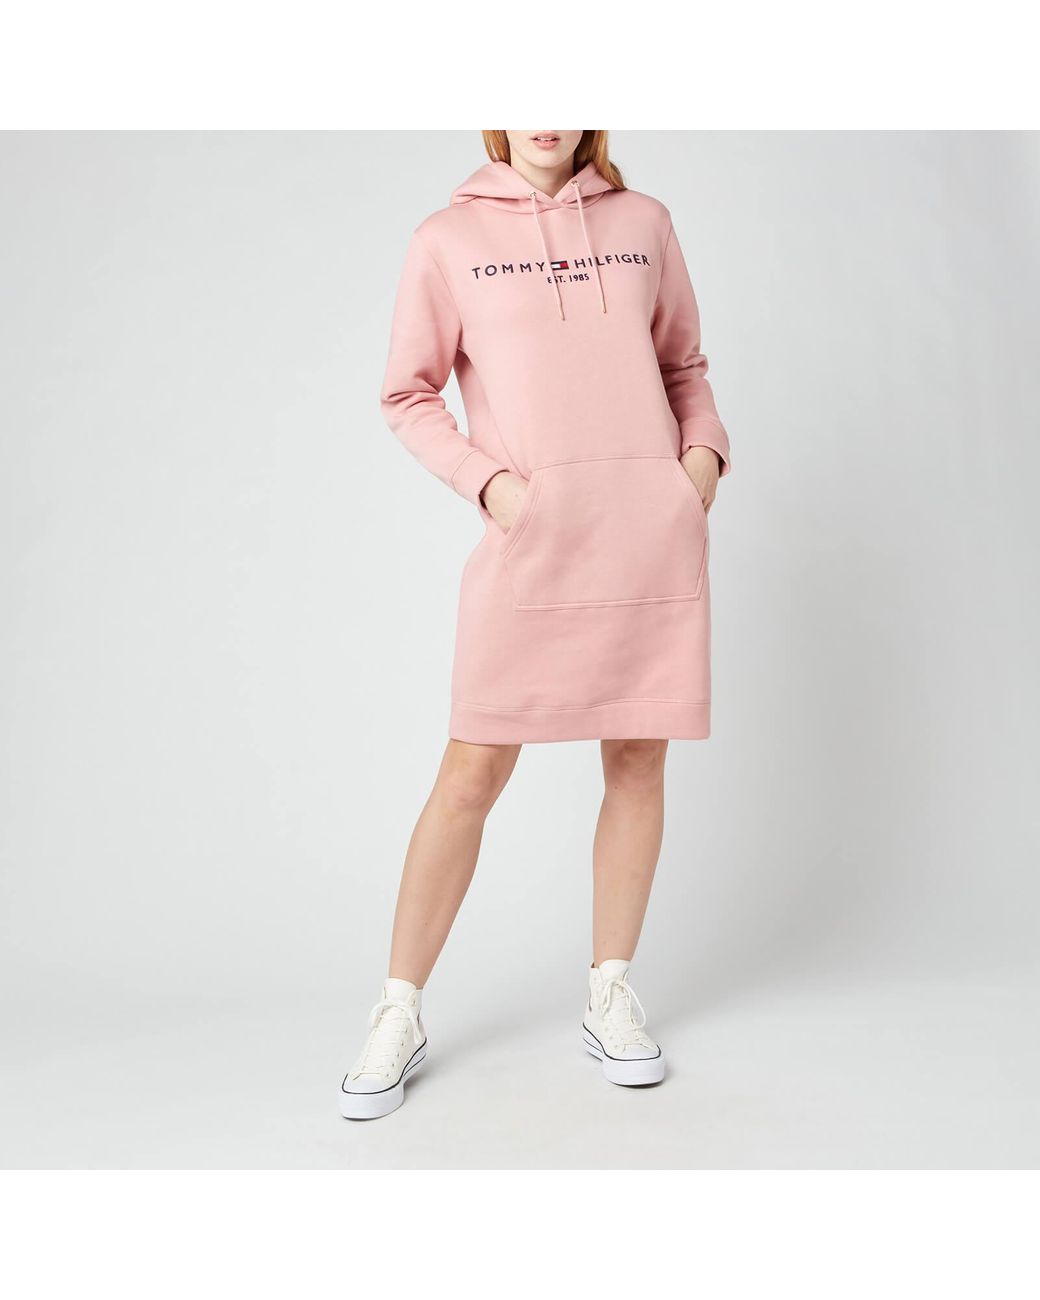 Tommy Hilfiger Th Essentials Hilfiger Hoodie Dress in Pink | Lyst Canada